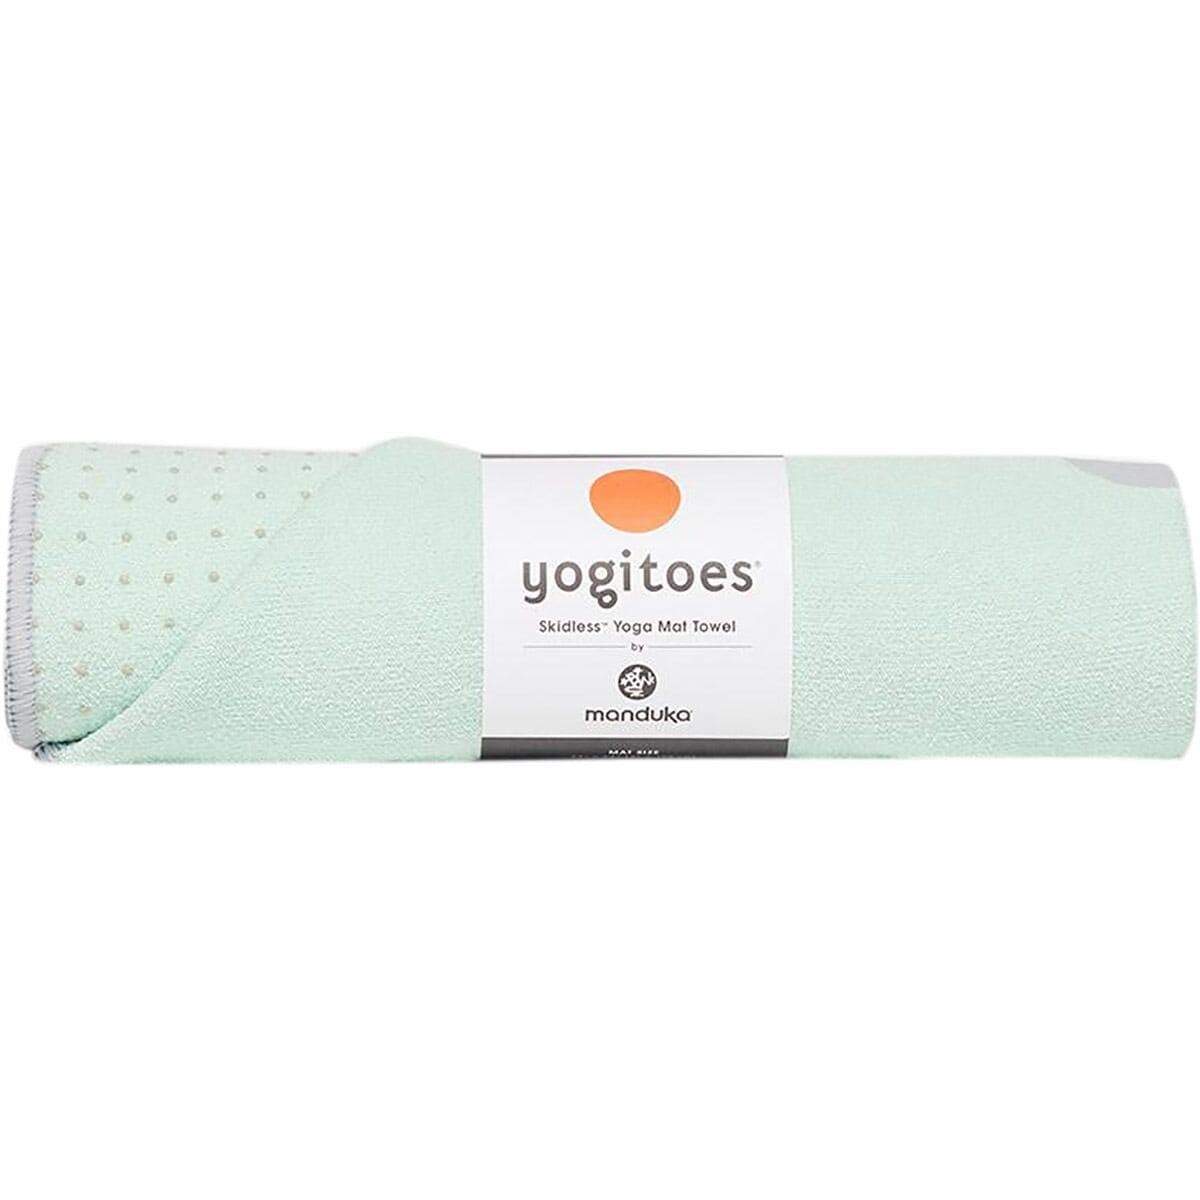 Manduka Yogitoes Skidless Yoga Towel